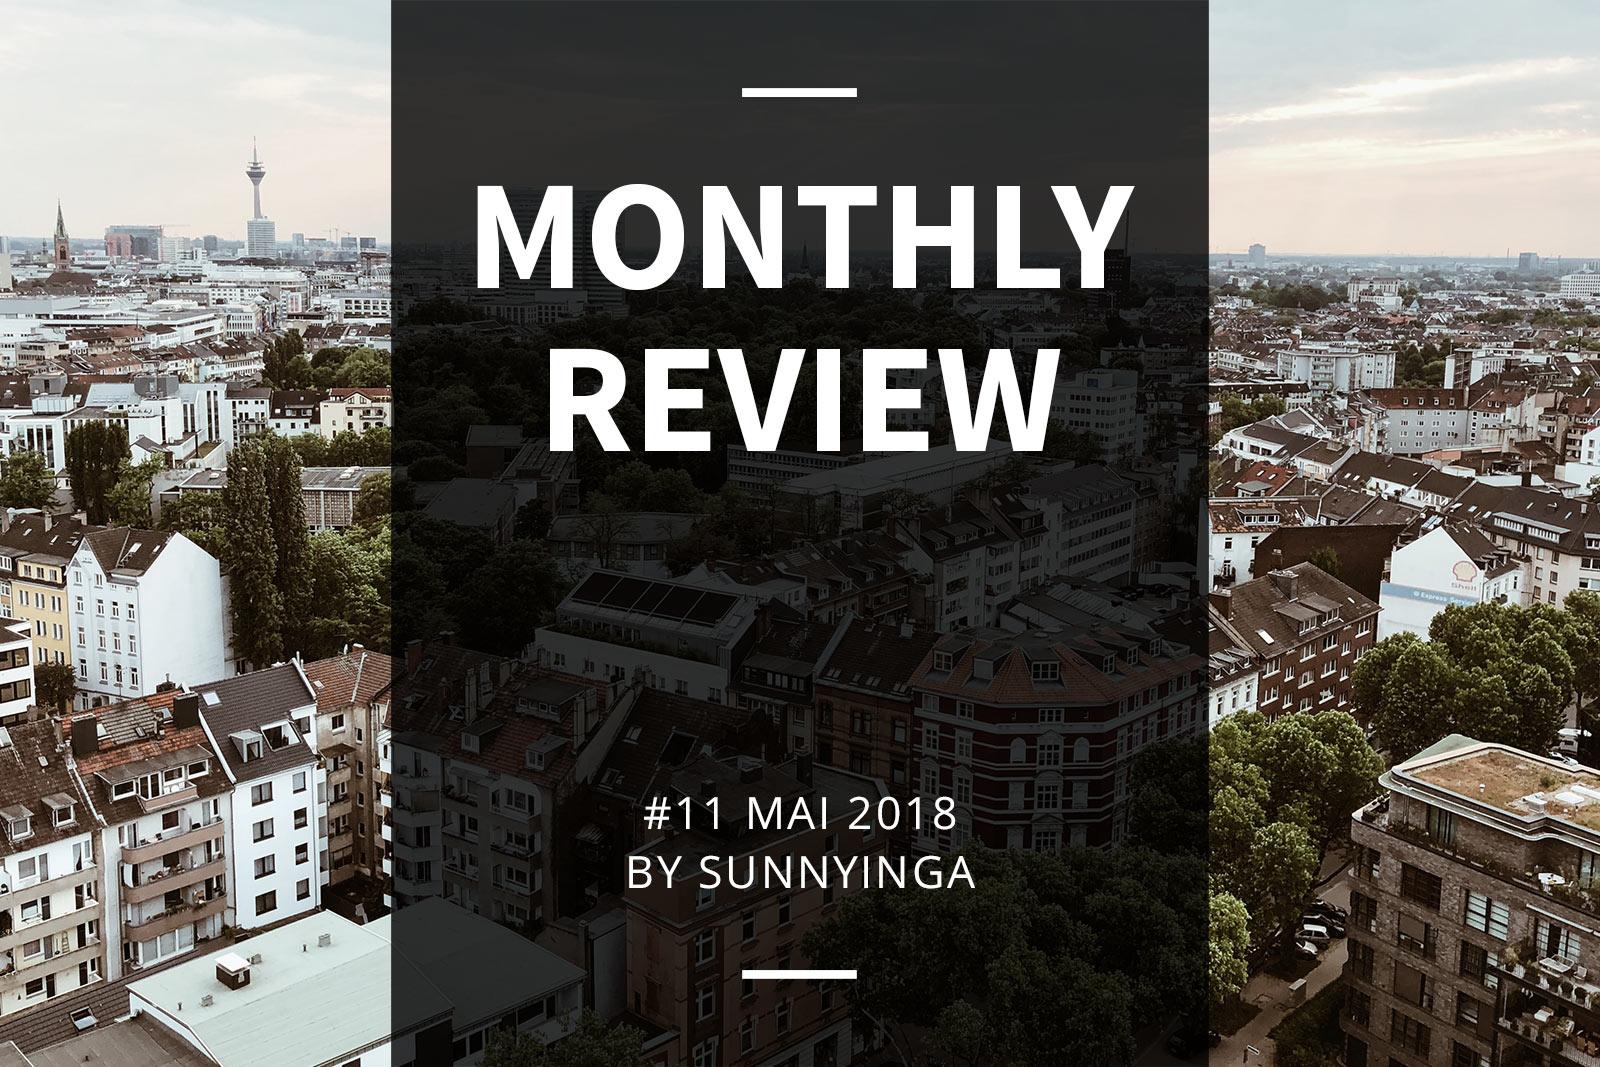 Sunnyinga Monthly Review Monatsrückblick #11 Mai 2018